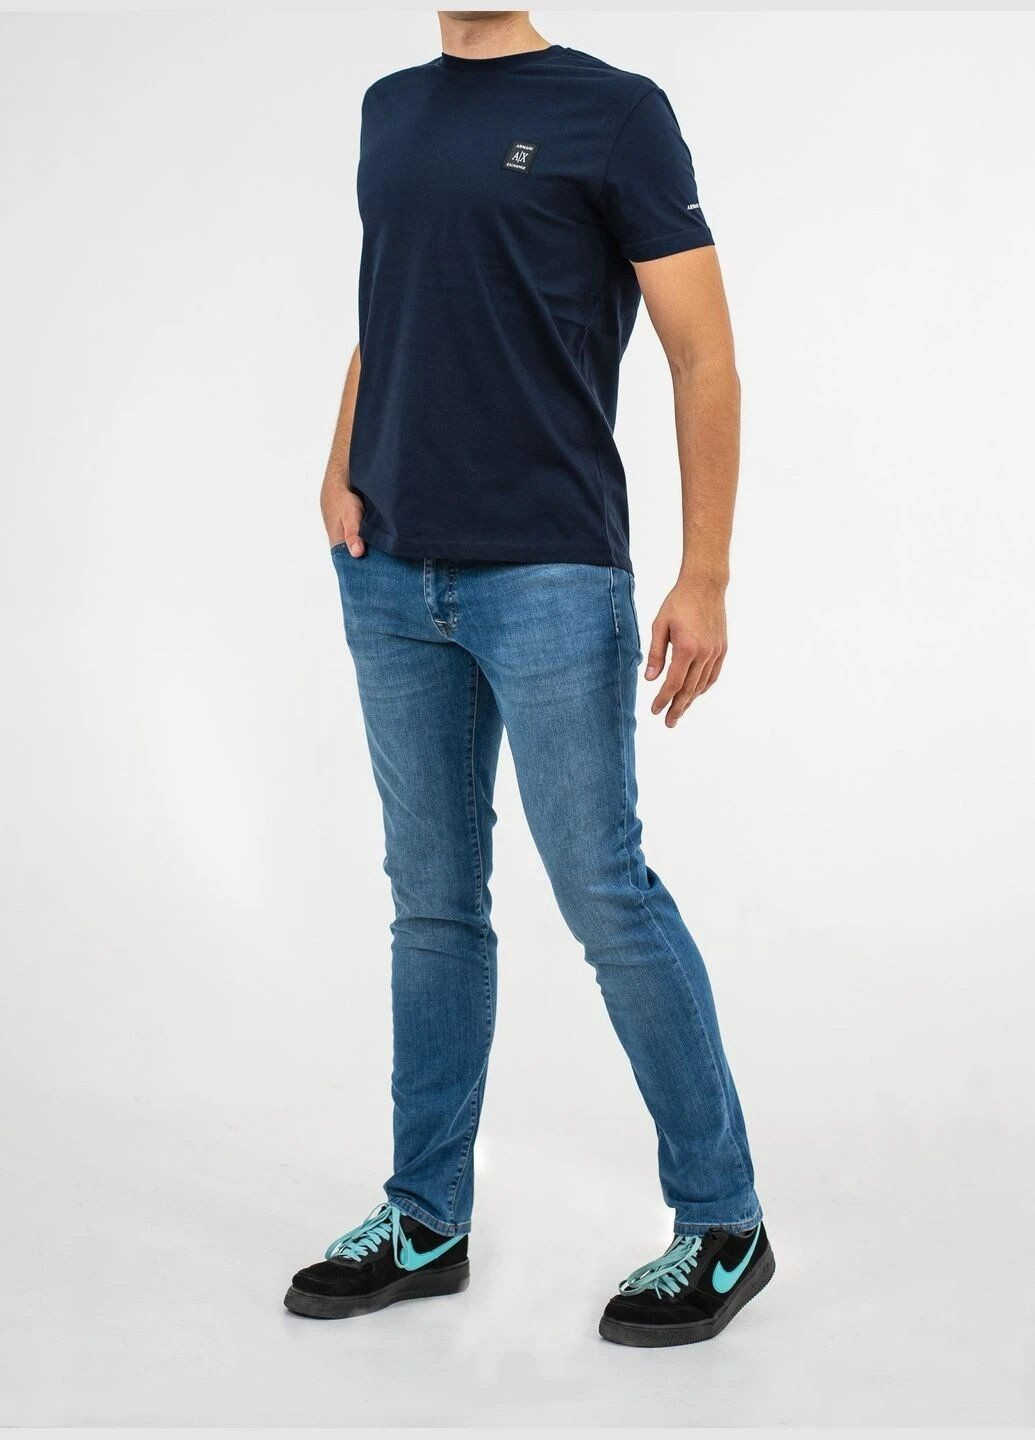 Темно-синяя футболка мужская с коротким рукавом Armani ICON PERIOD